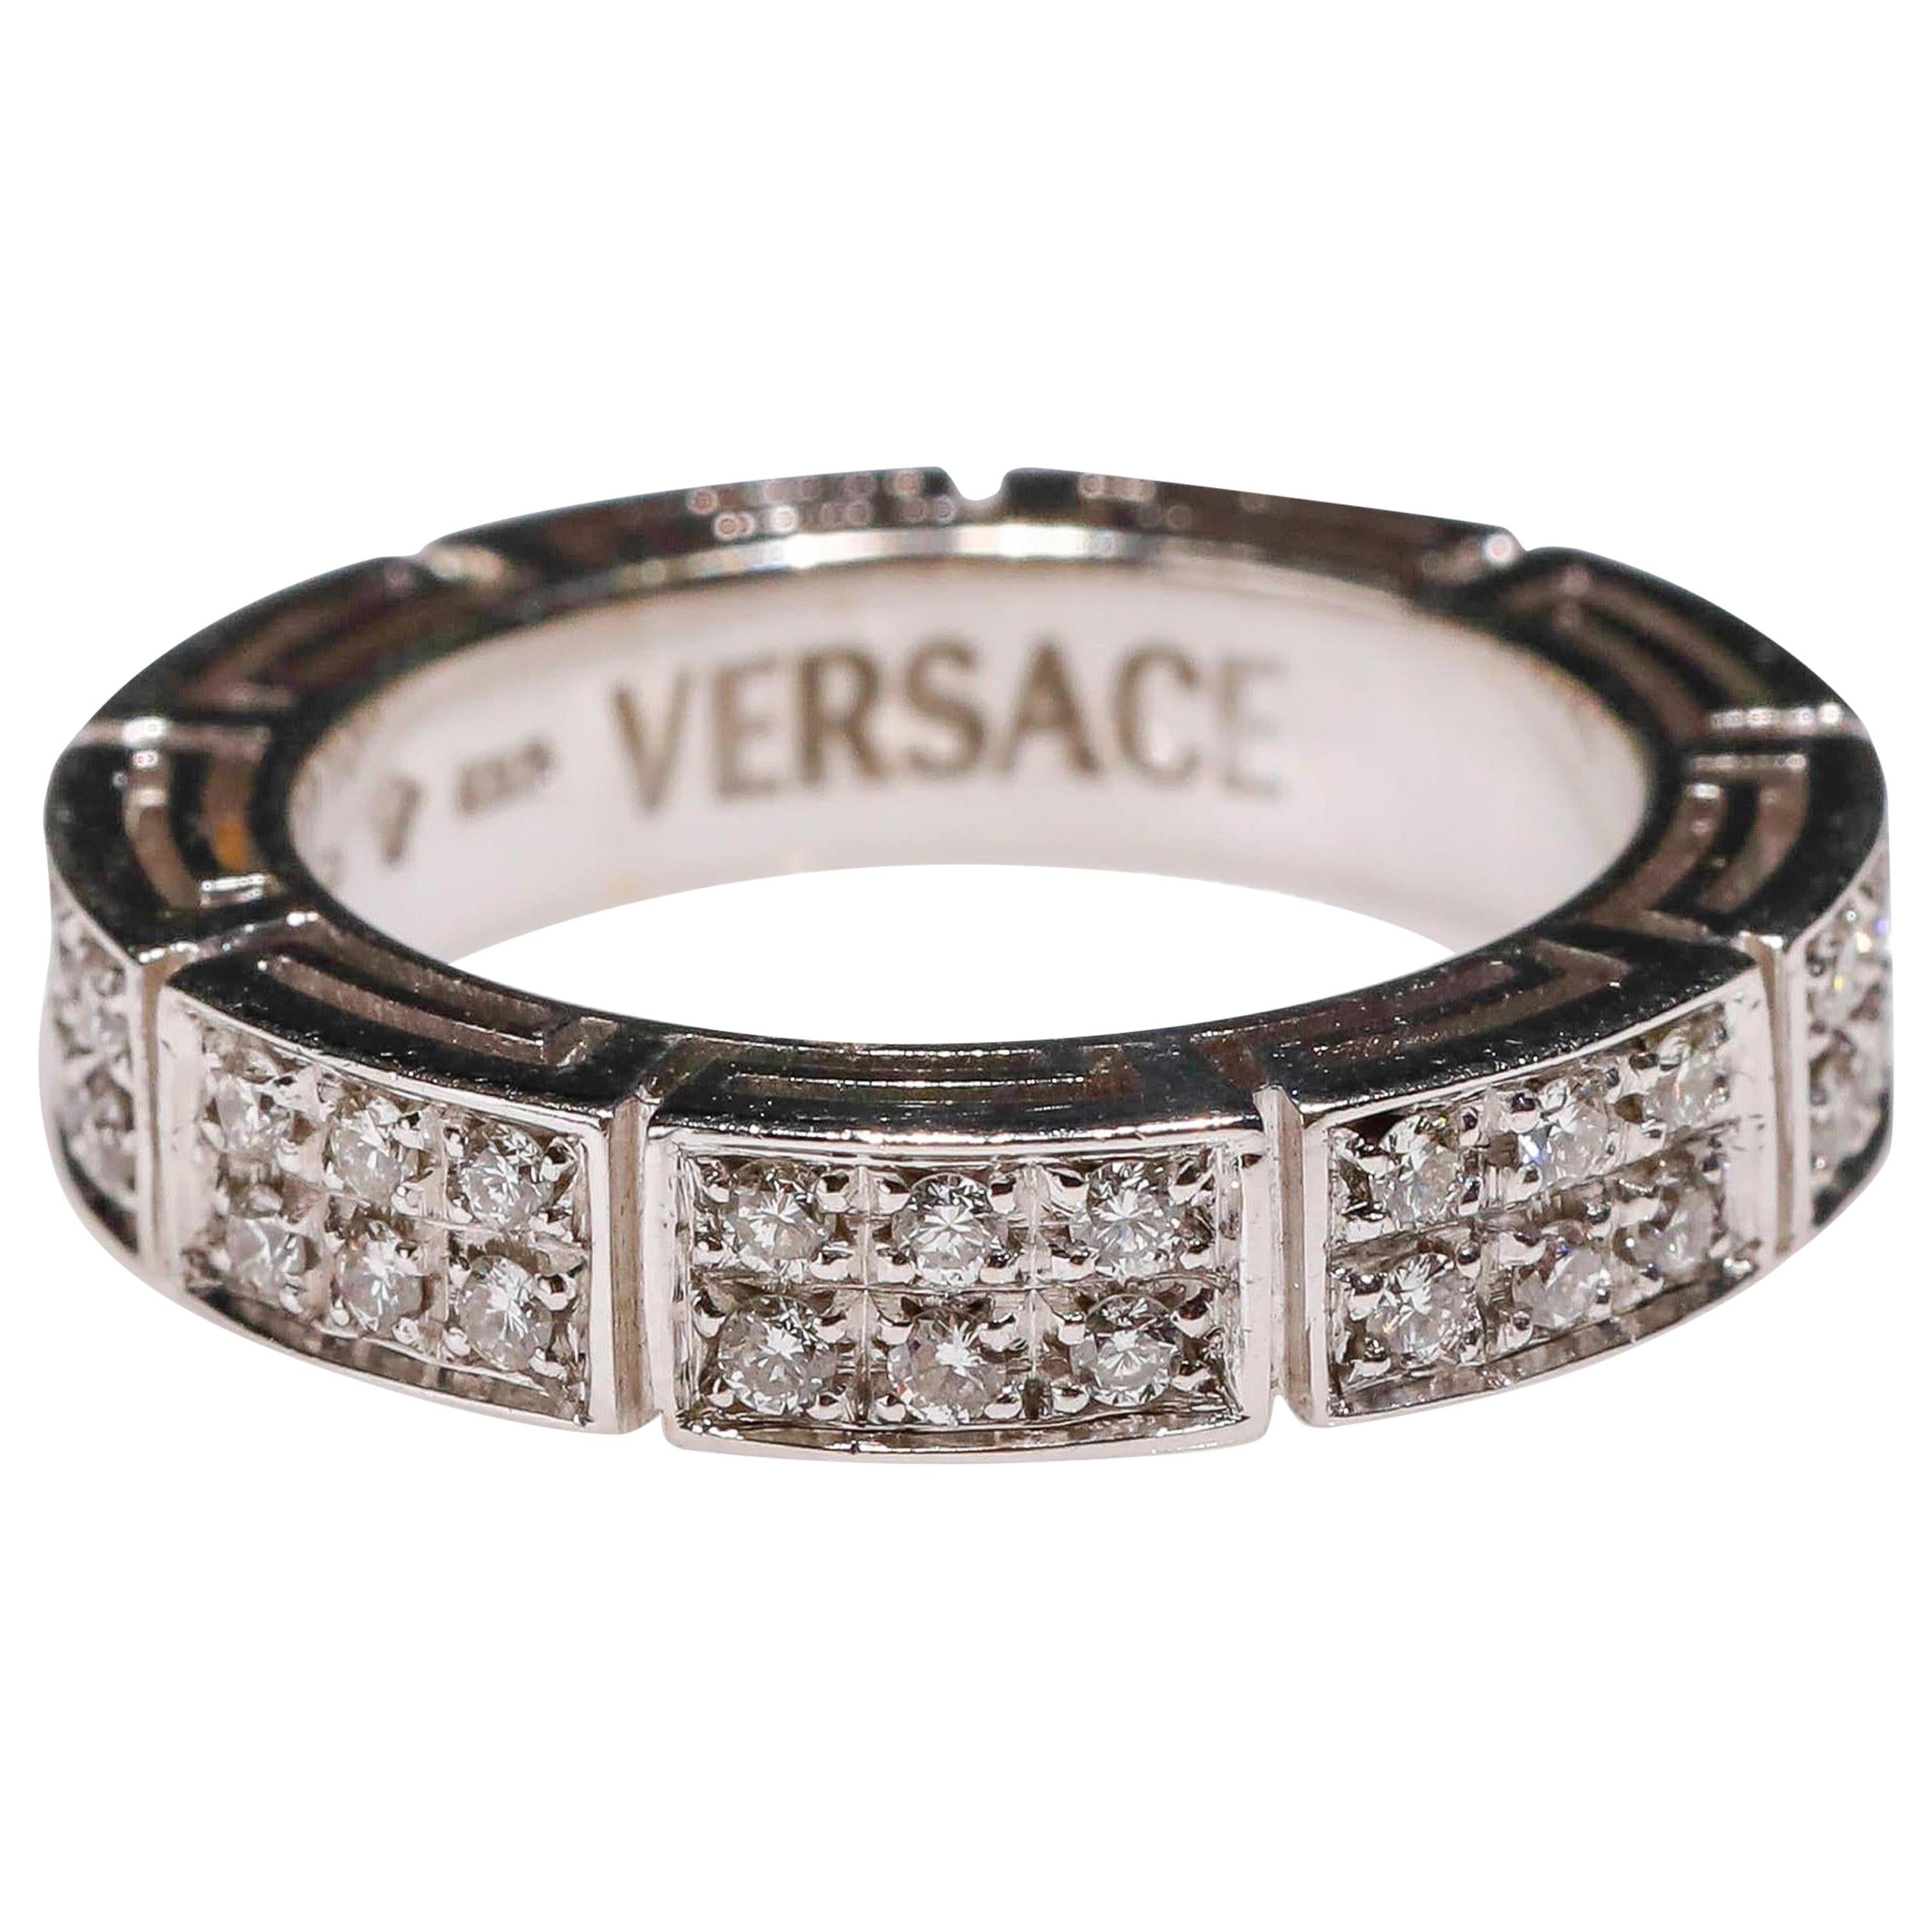 Versace 18 Karat White Gold 1.0 Carat Round Diamond Full Eternity Band Ring